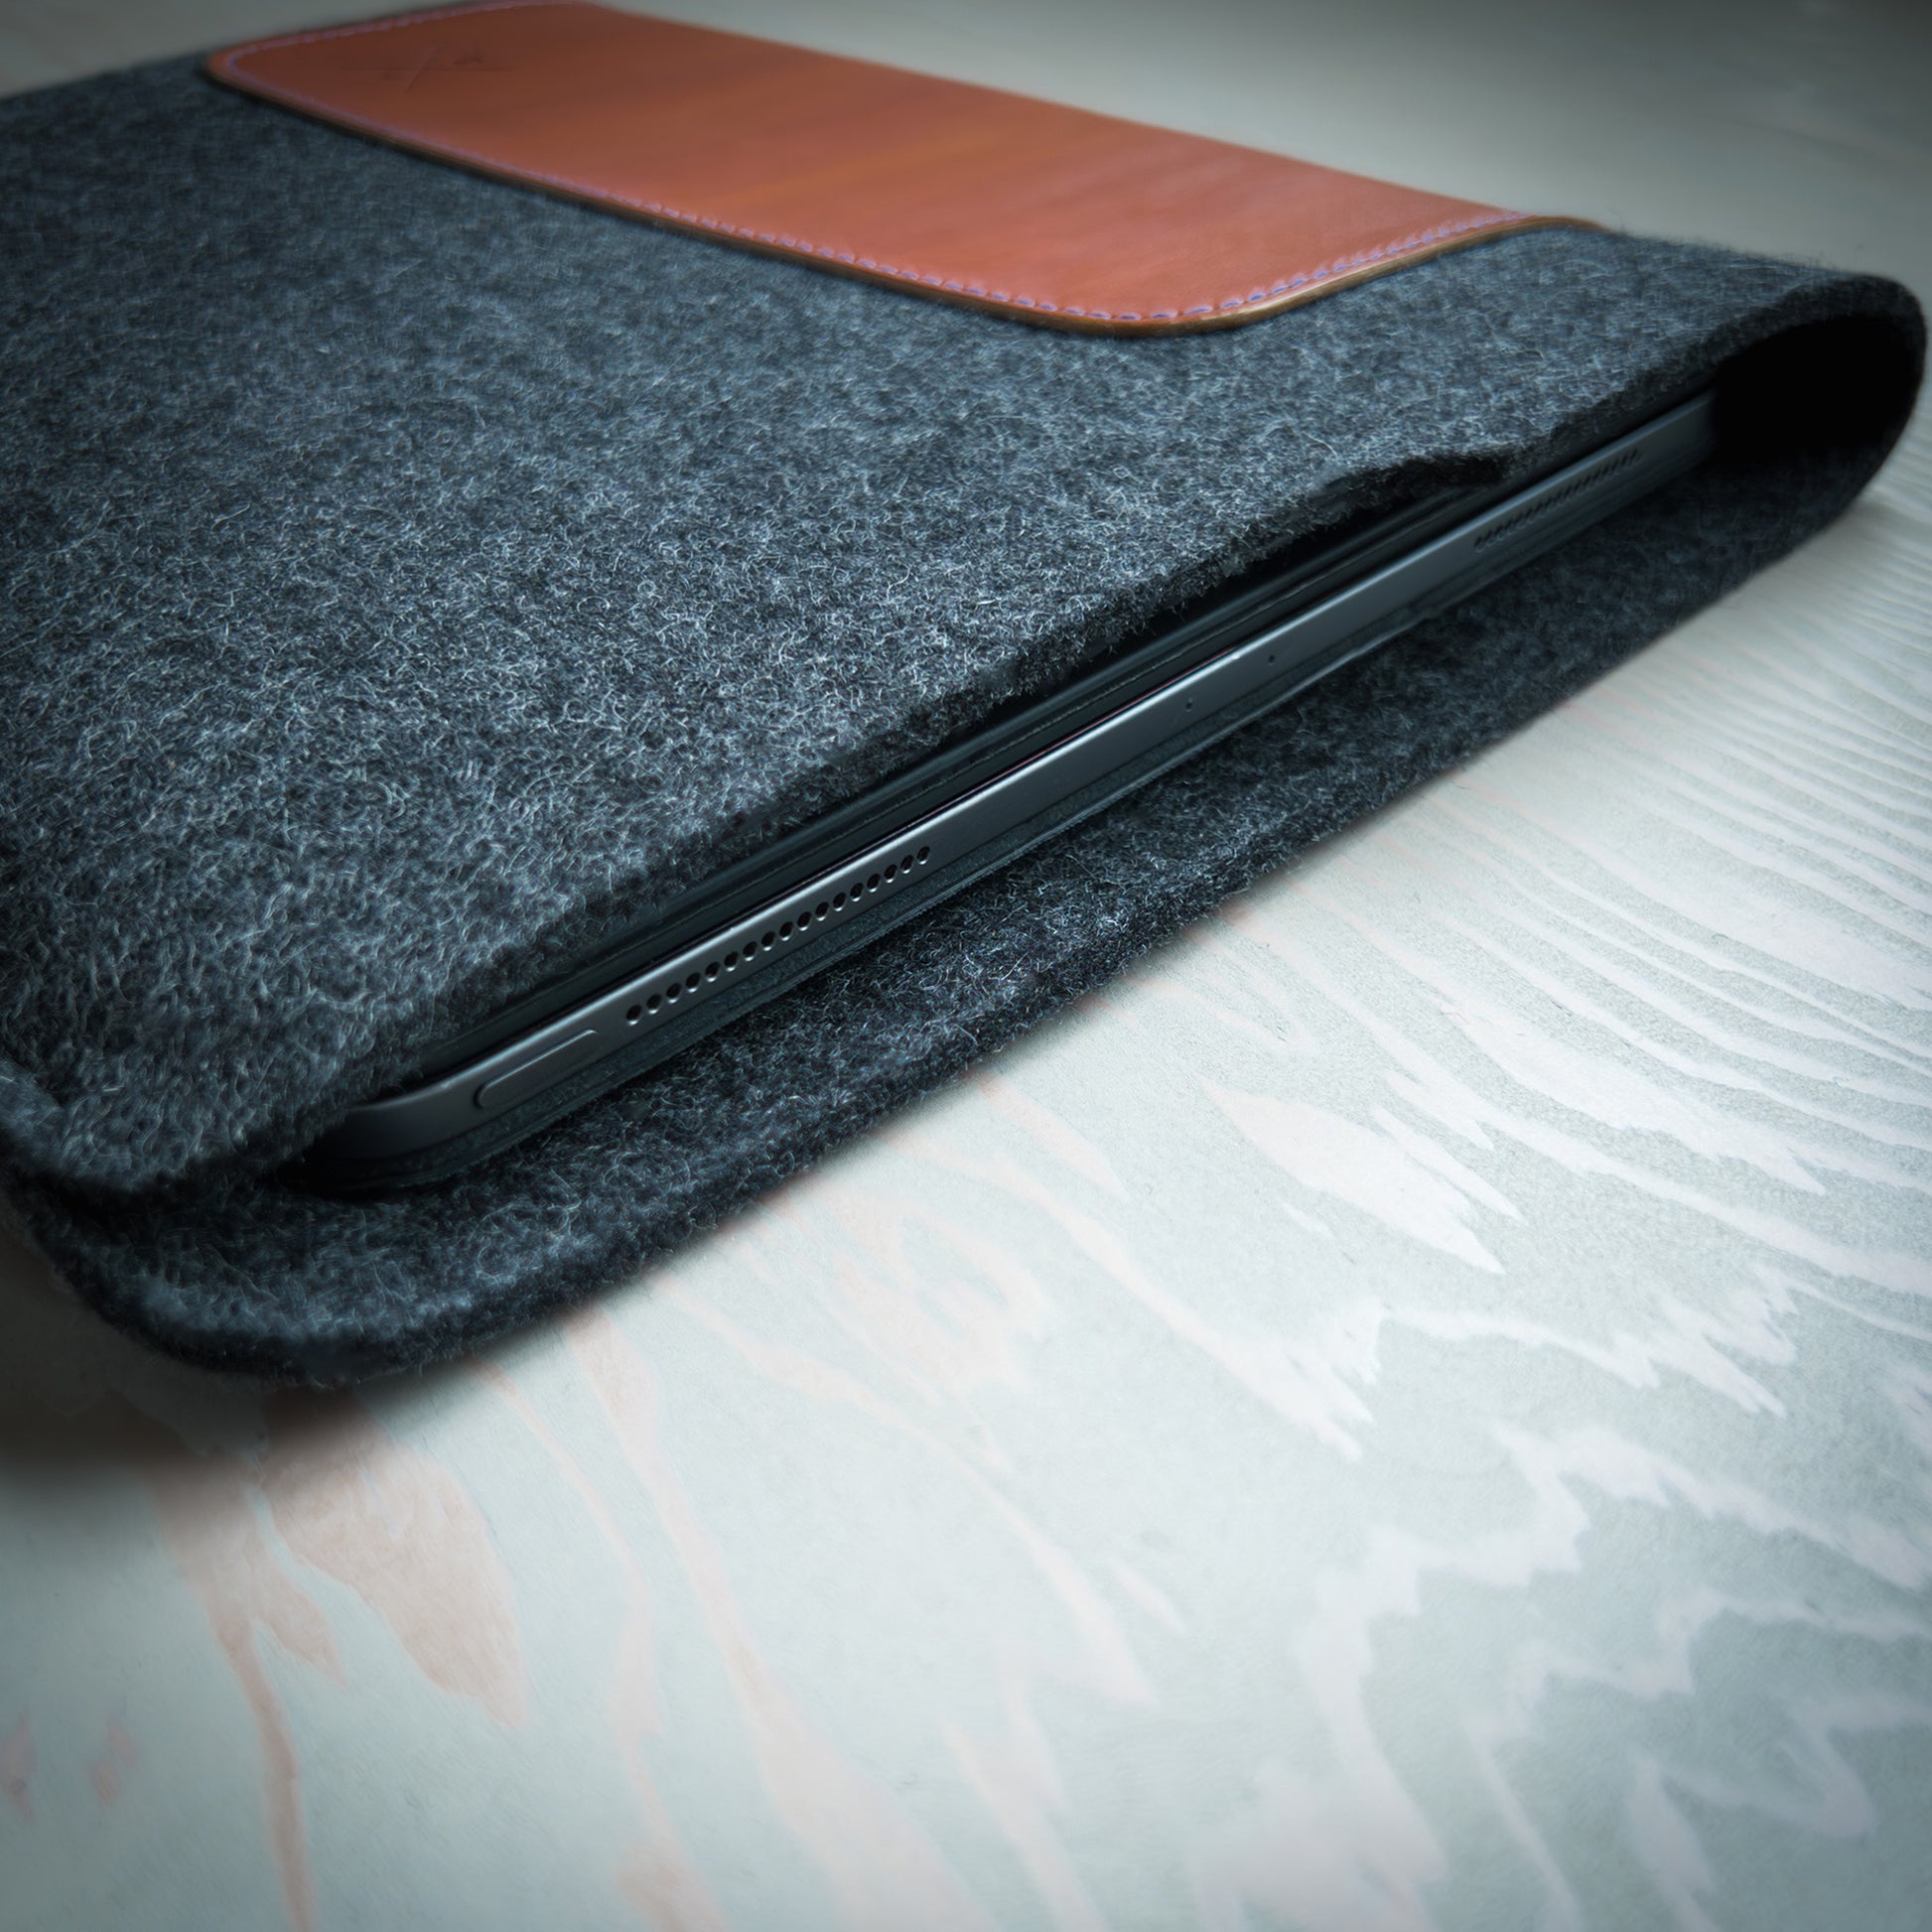 iPad Pro Sleeve in Cognac Leather and Wool Felt Handmade in Canada